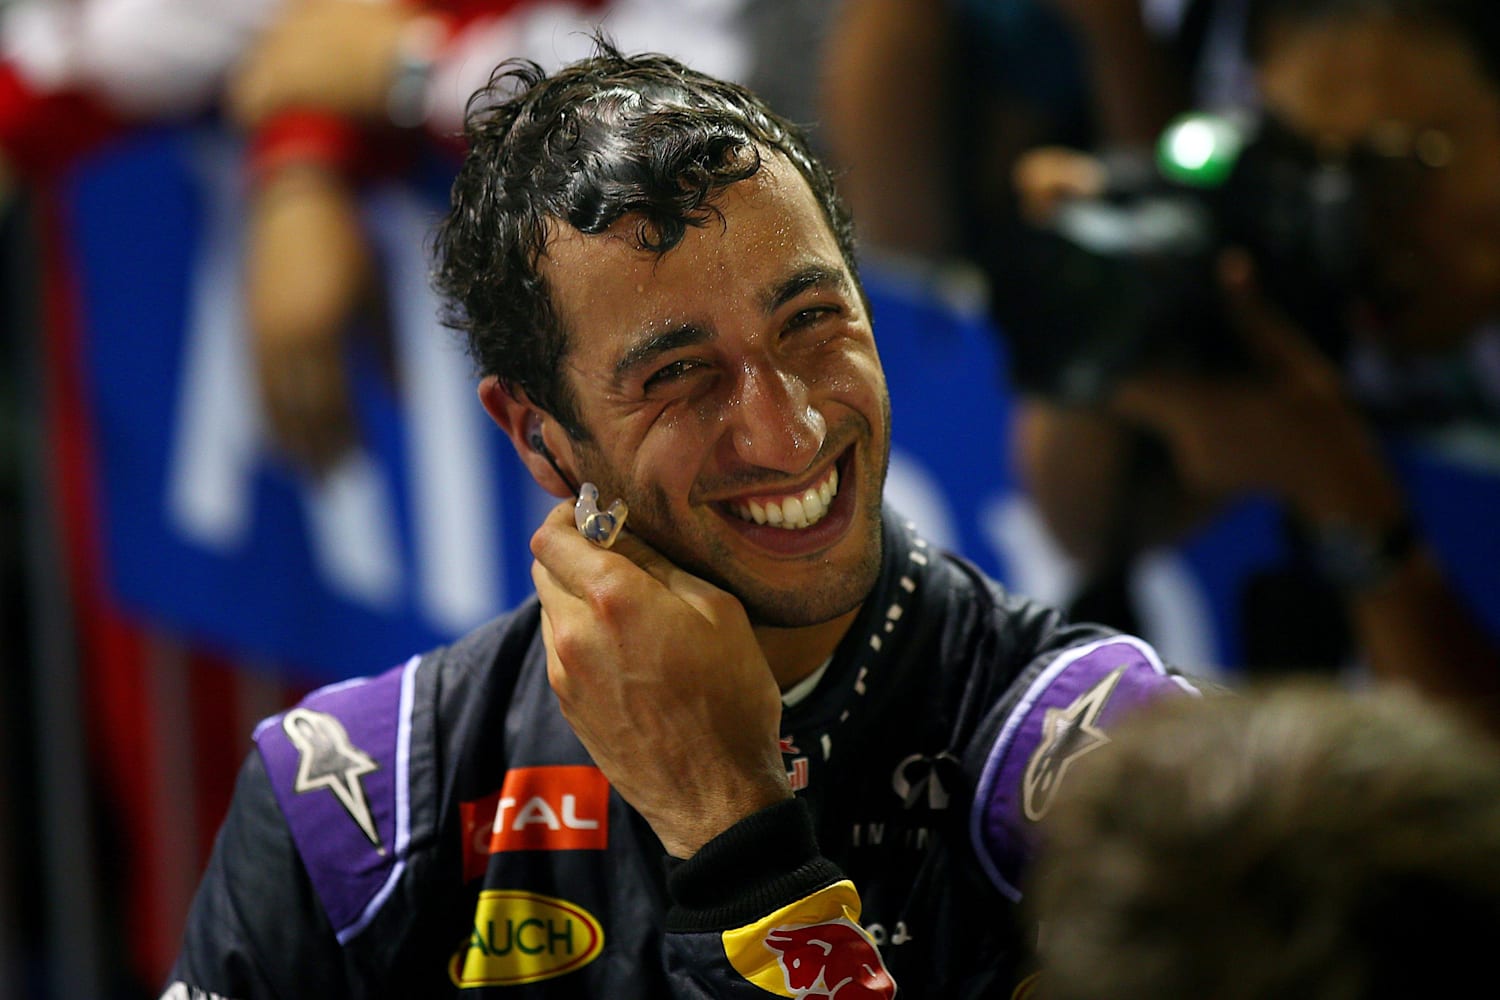 Daniel Ricciardo on how to prepare for the Singapore GP